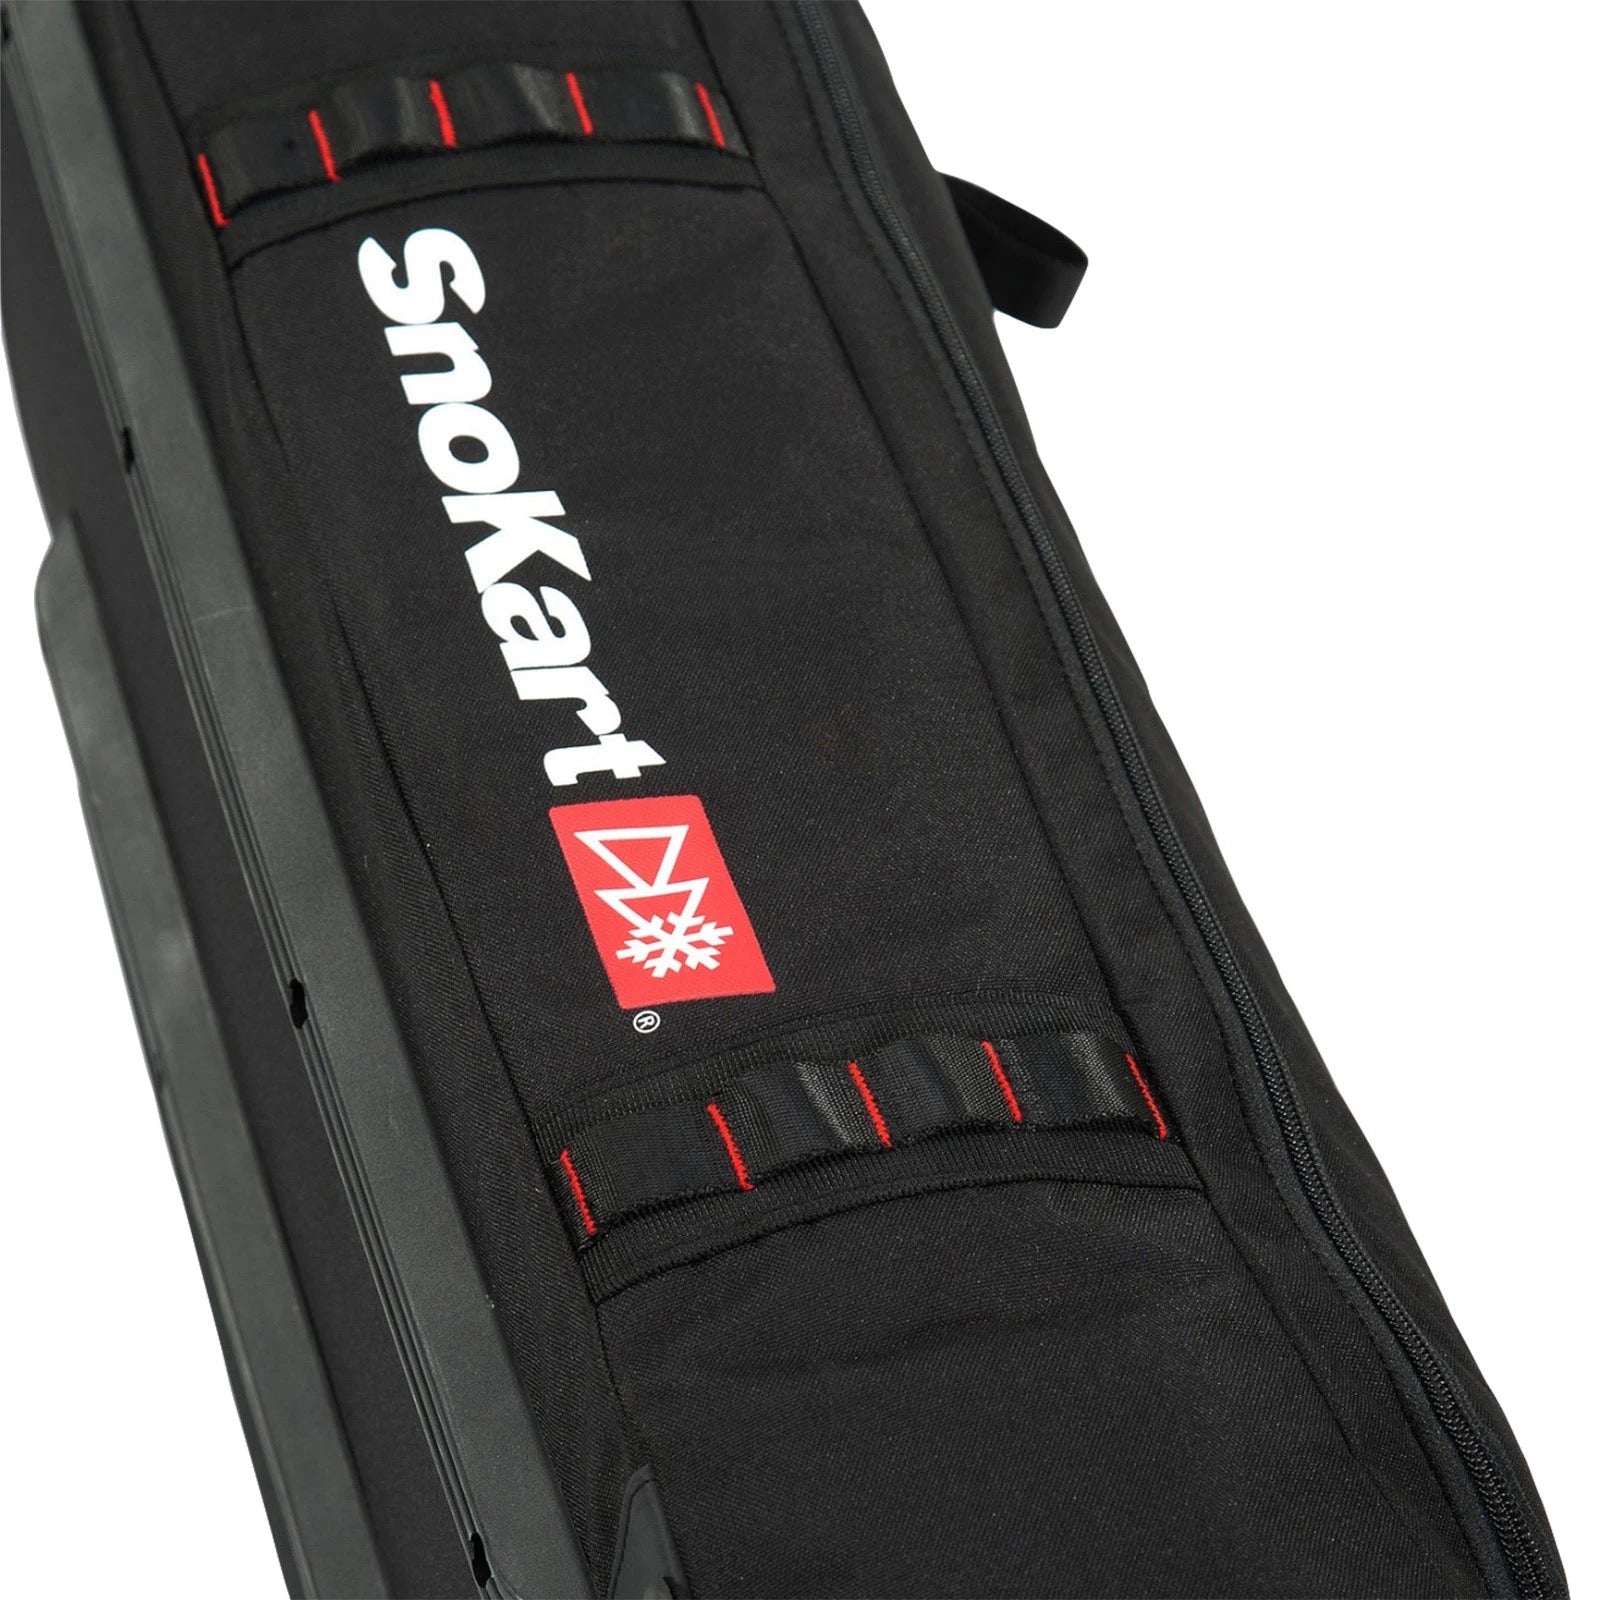 Snokart Kart 3 Luggage System